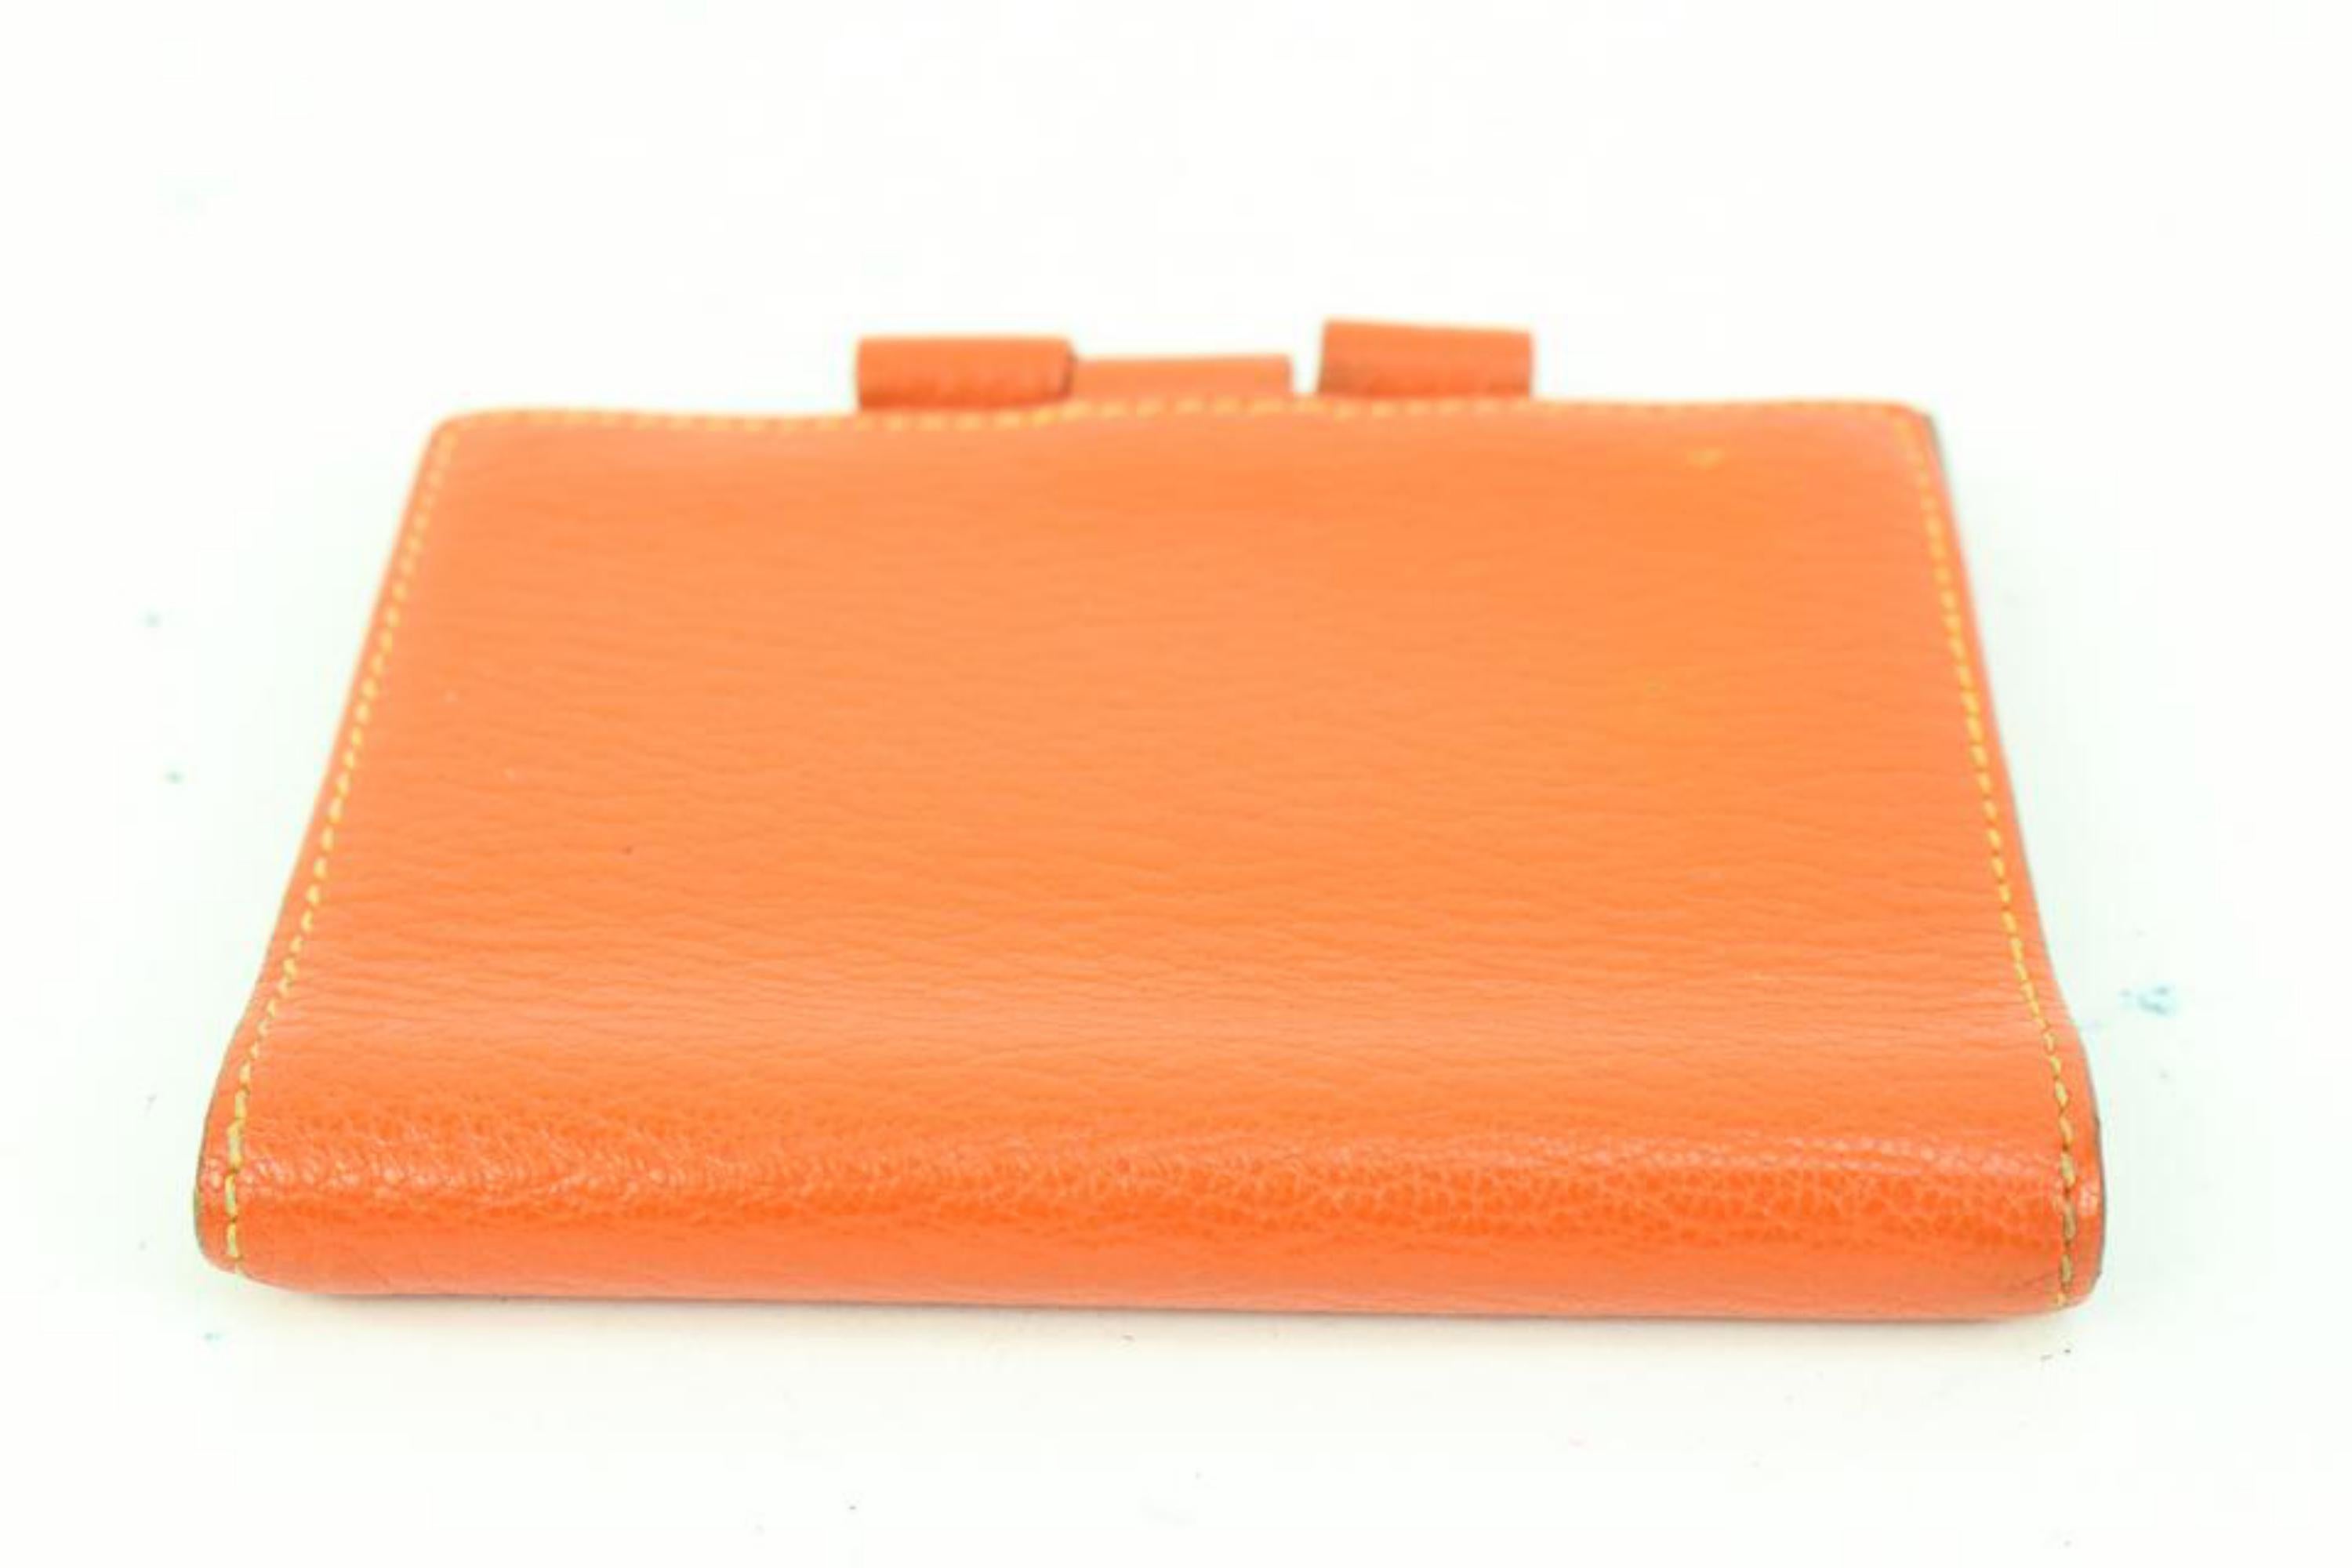 Hermès Orange Leather Globe Trotter Agenda Cover PM 11h426s For Sale 1